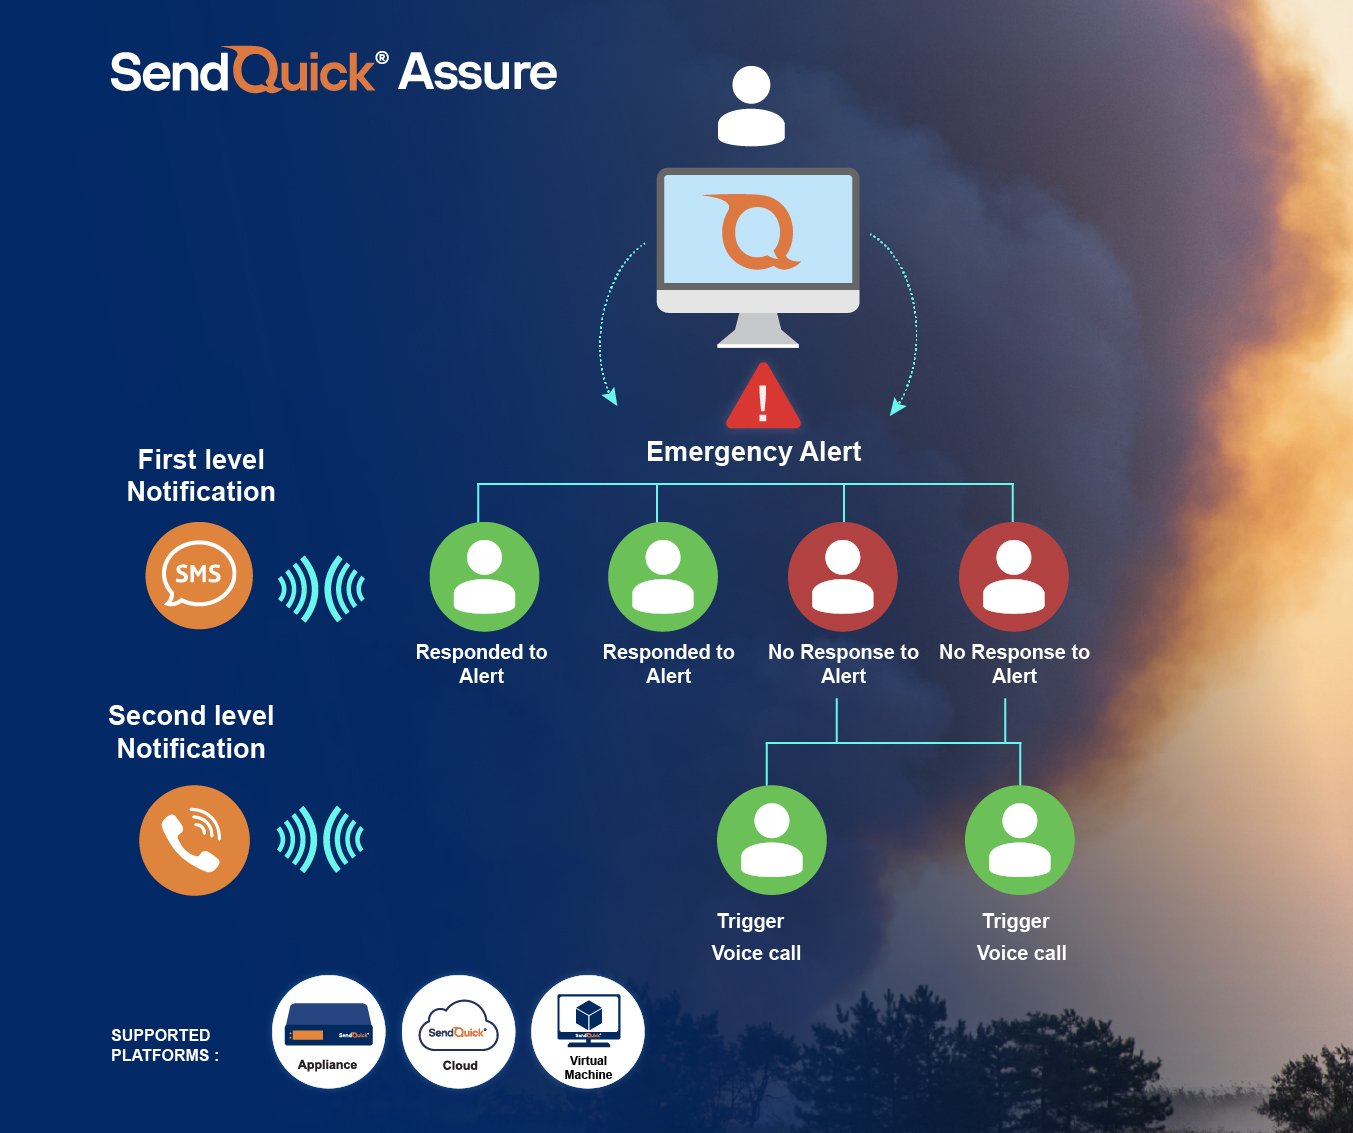 SendQuick-Assure-image-Bulwark-Technologies